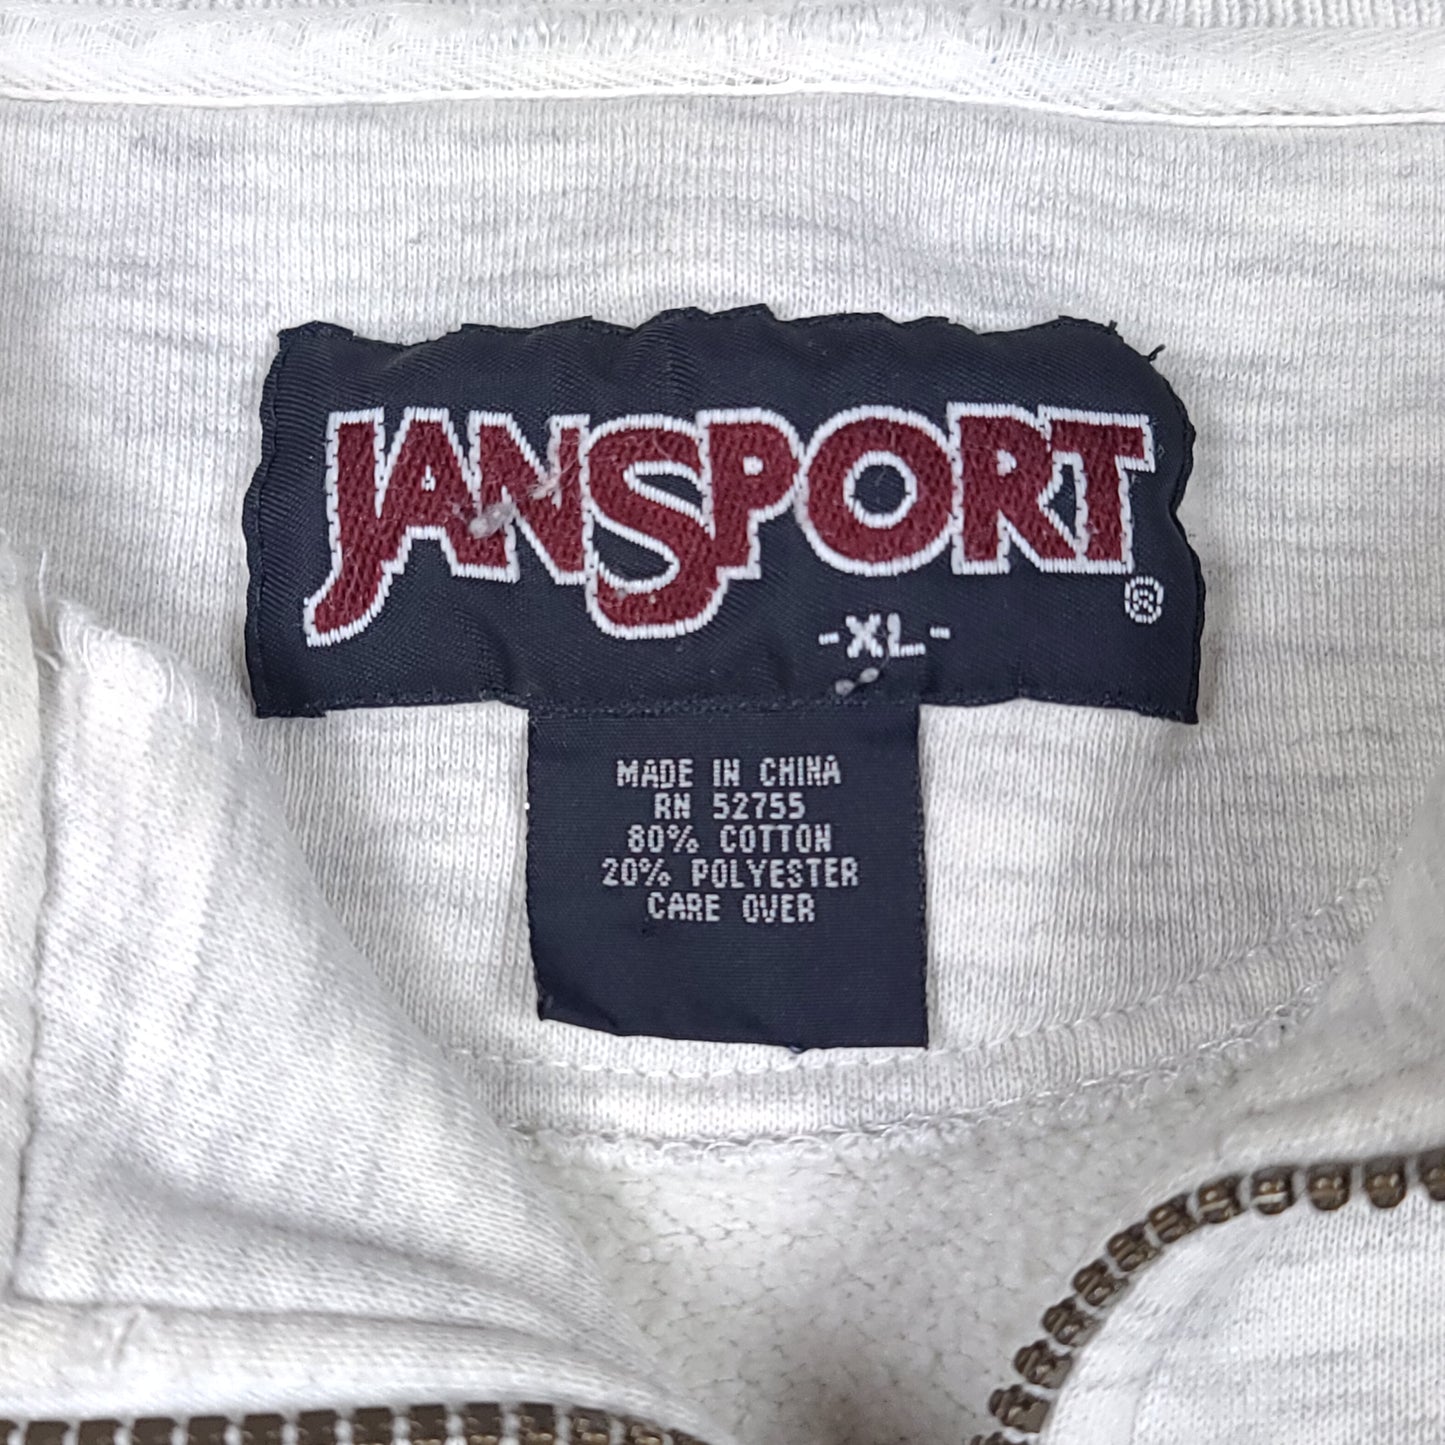 Vintage Ball State University Jansport Gray 1/4 Zip Sweatshirt